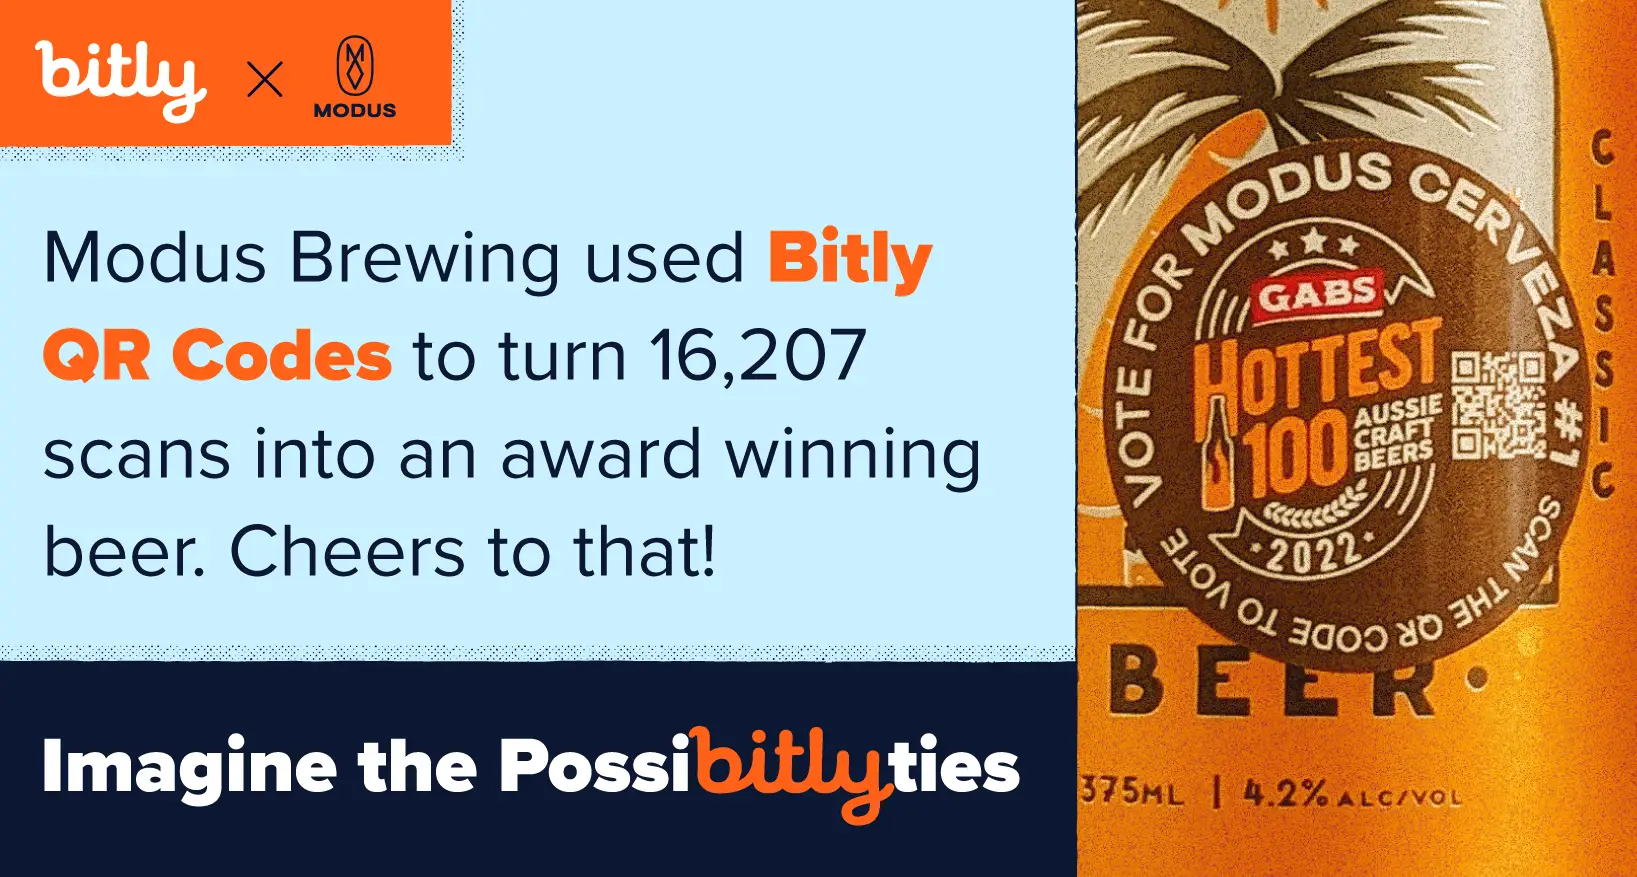 A description of Modus Brewing's success with Bitly QR Codes.